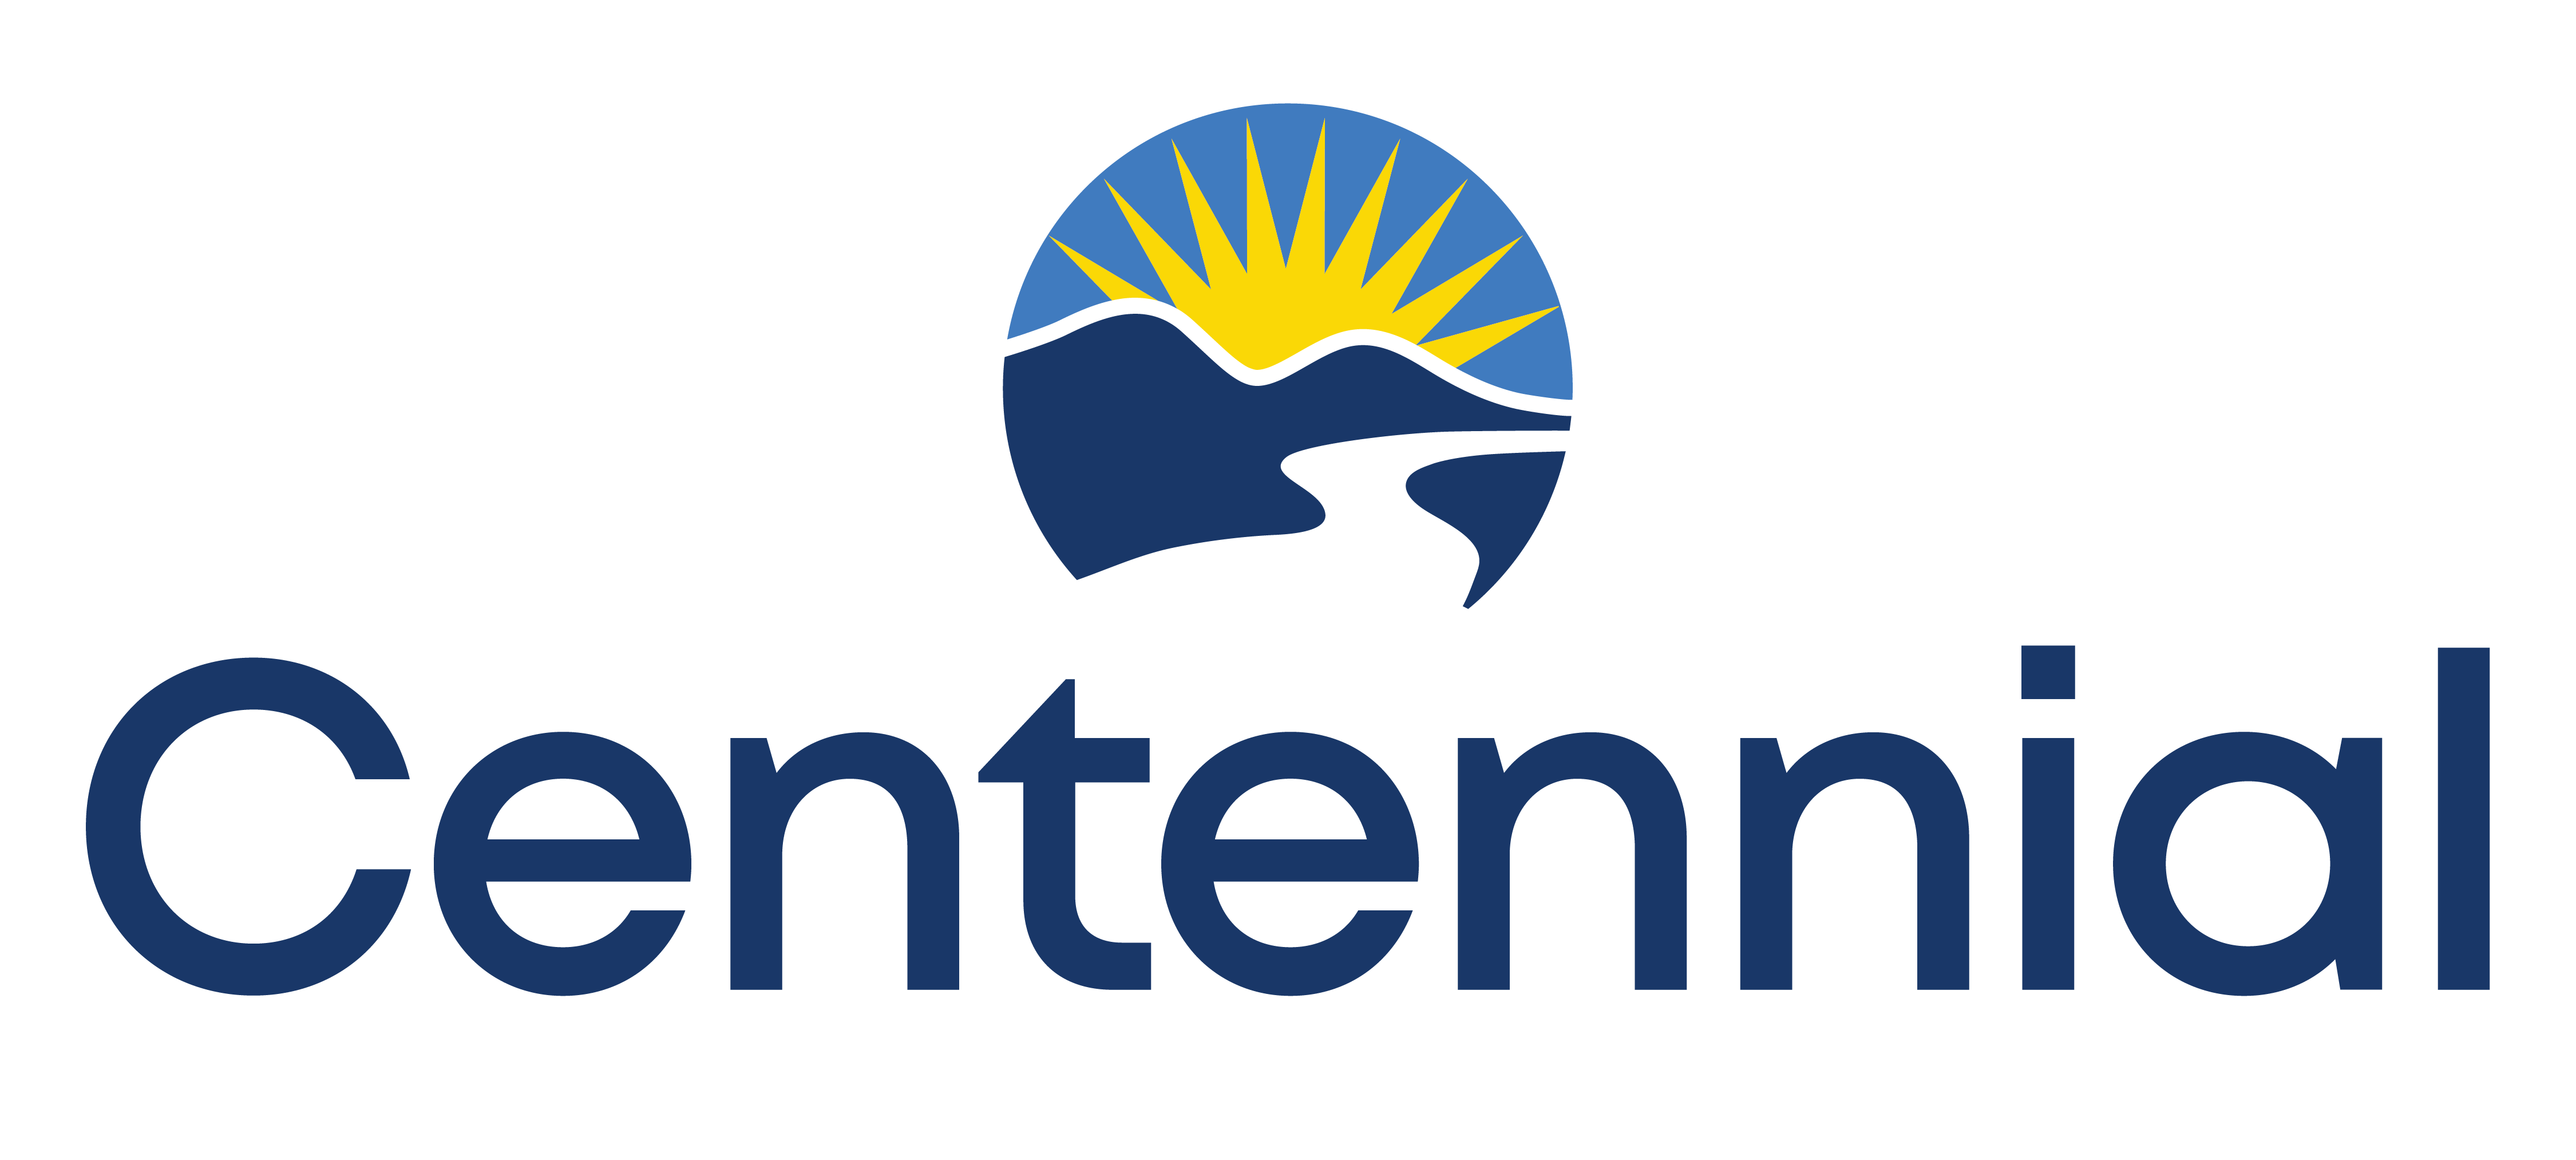 Organization logo of City of Centennial